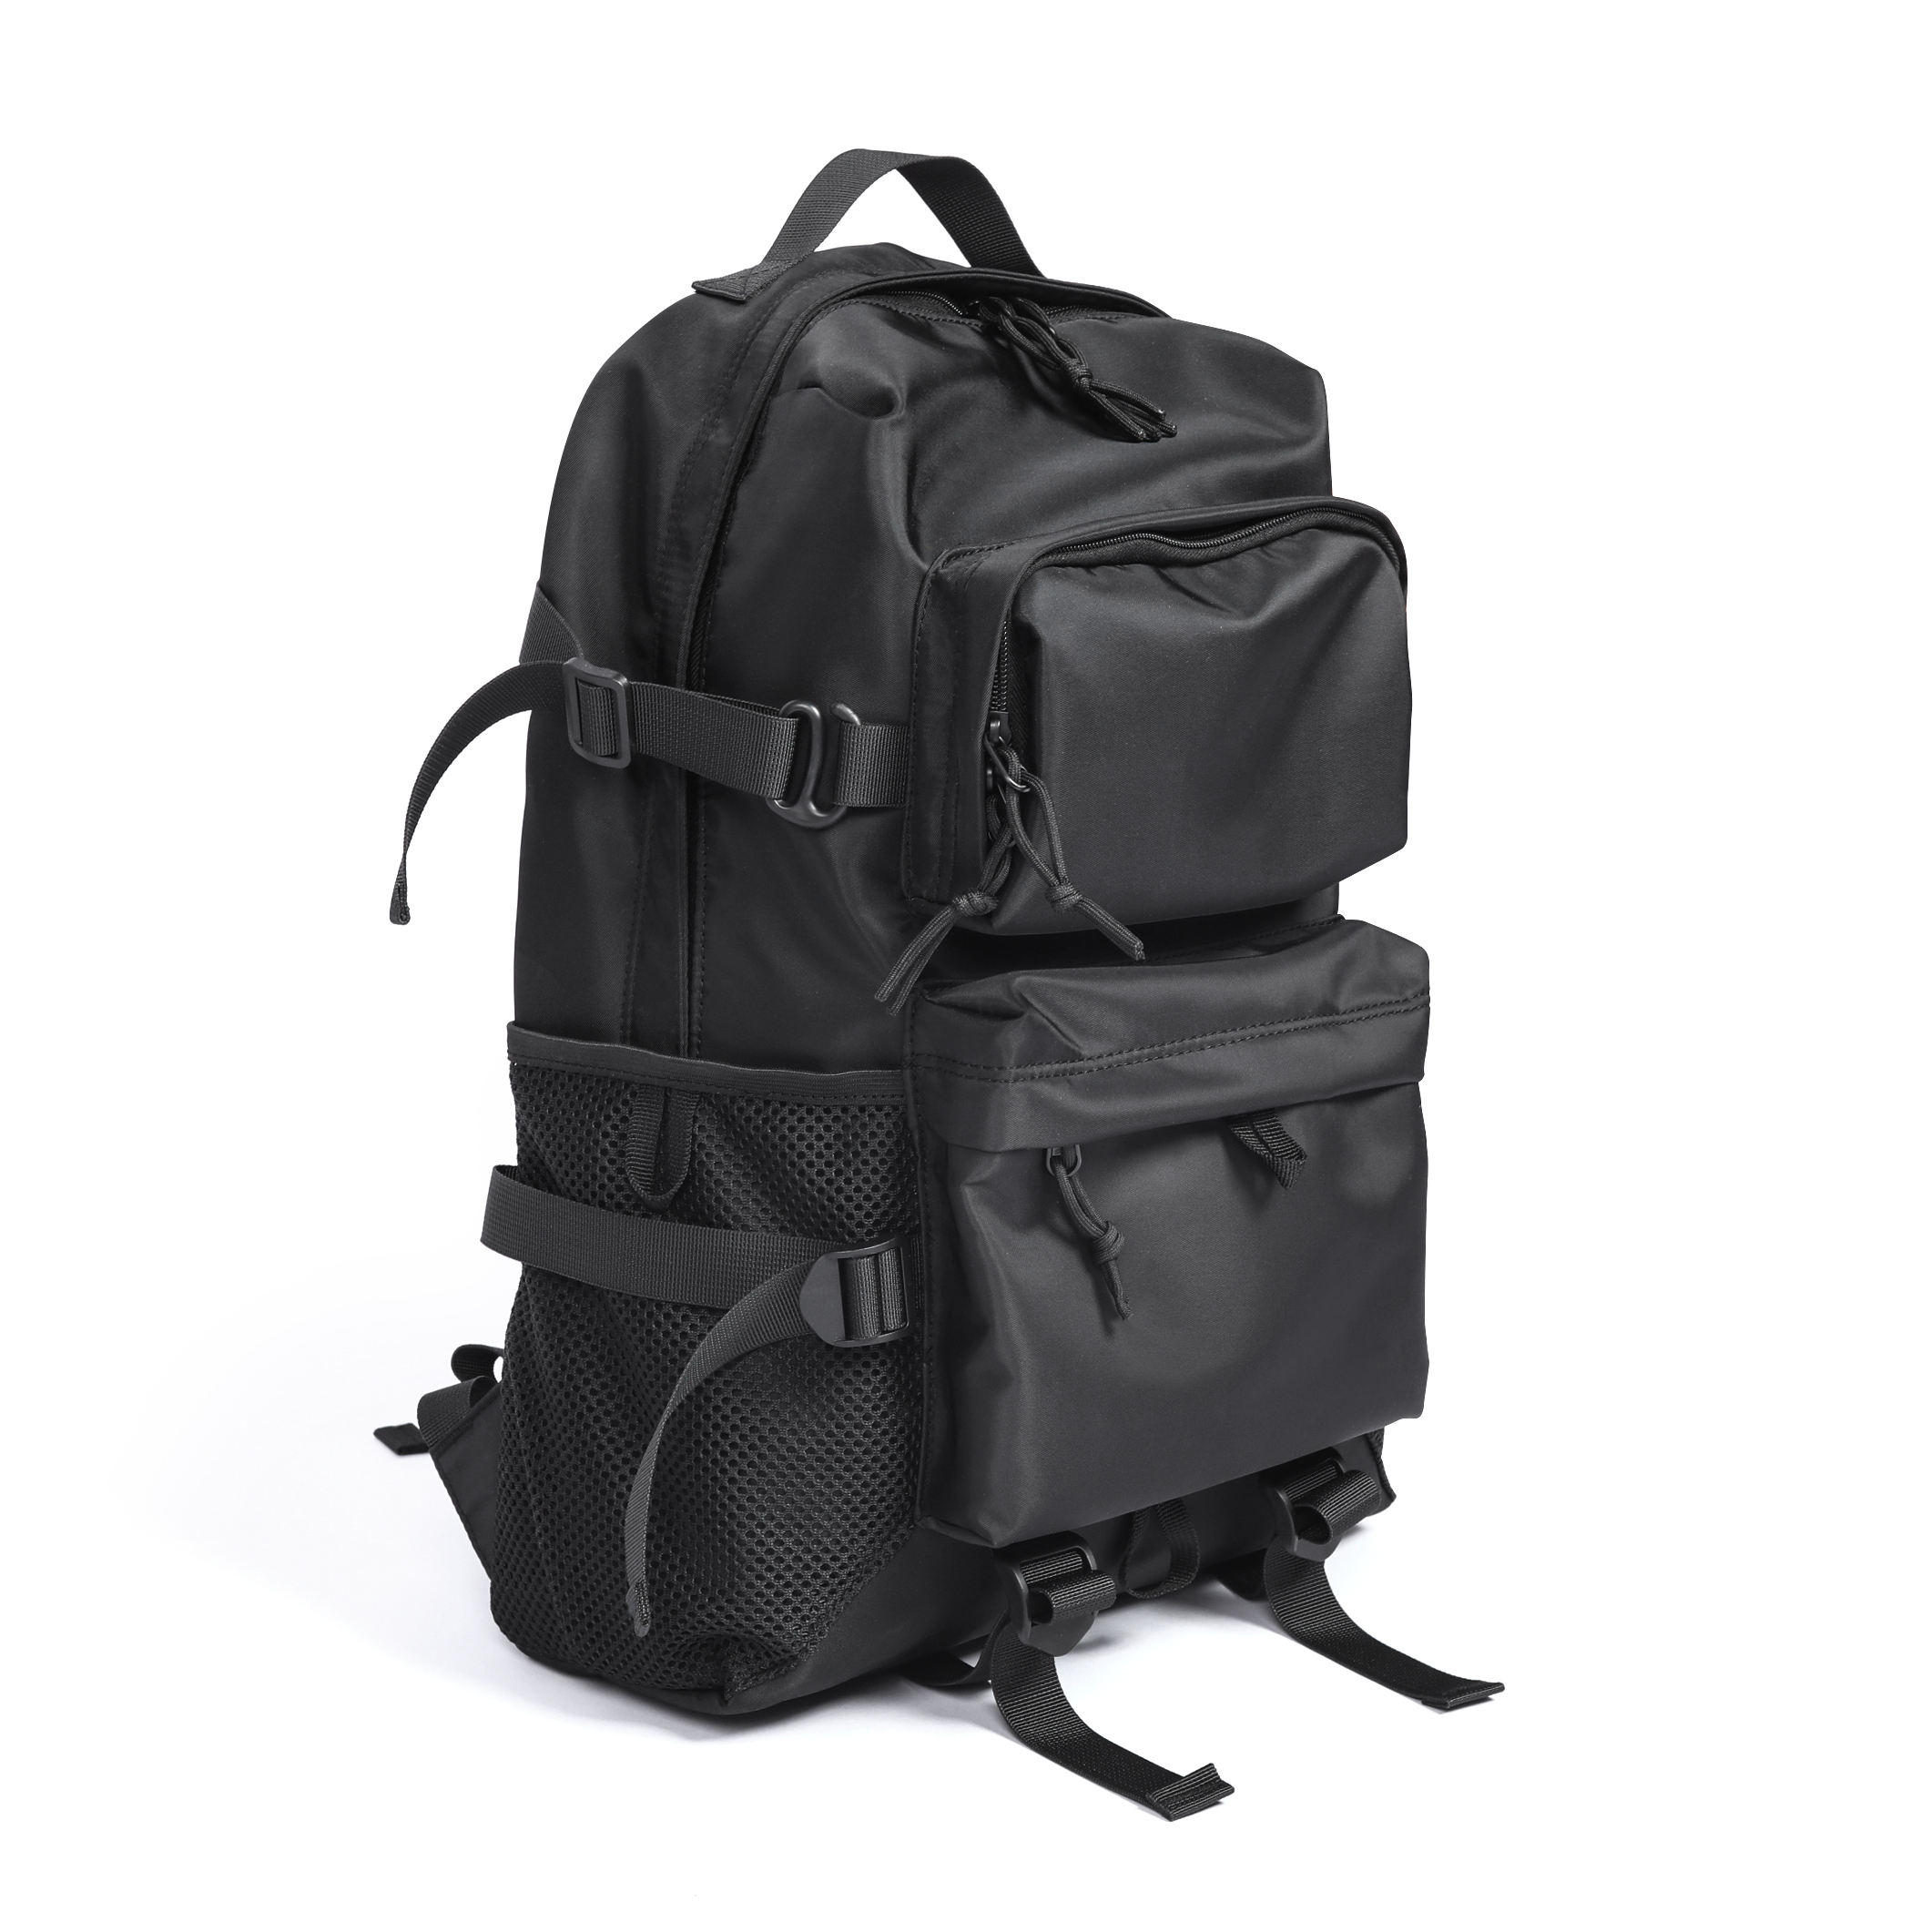 Traveling cycling hiking backpack waterproof leisure sports travel laptop bag student school bag backpack